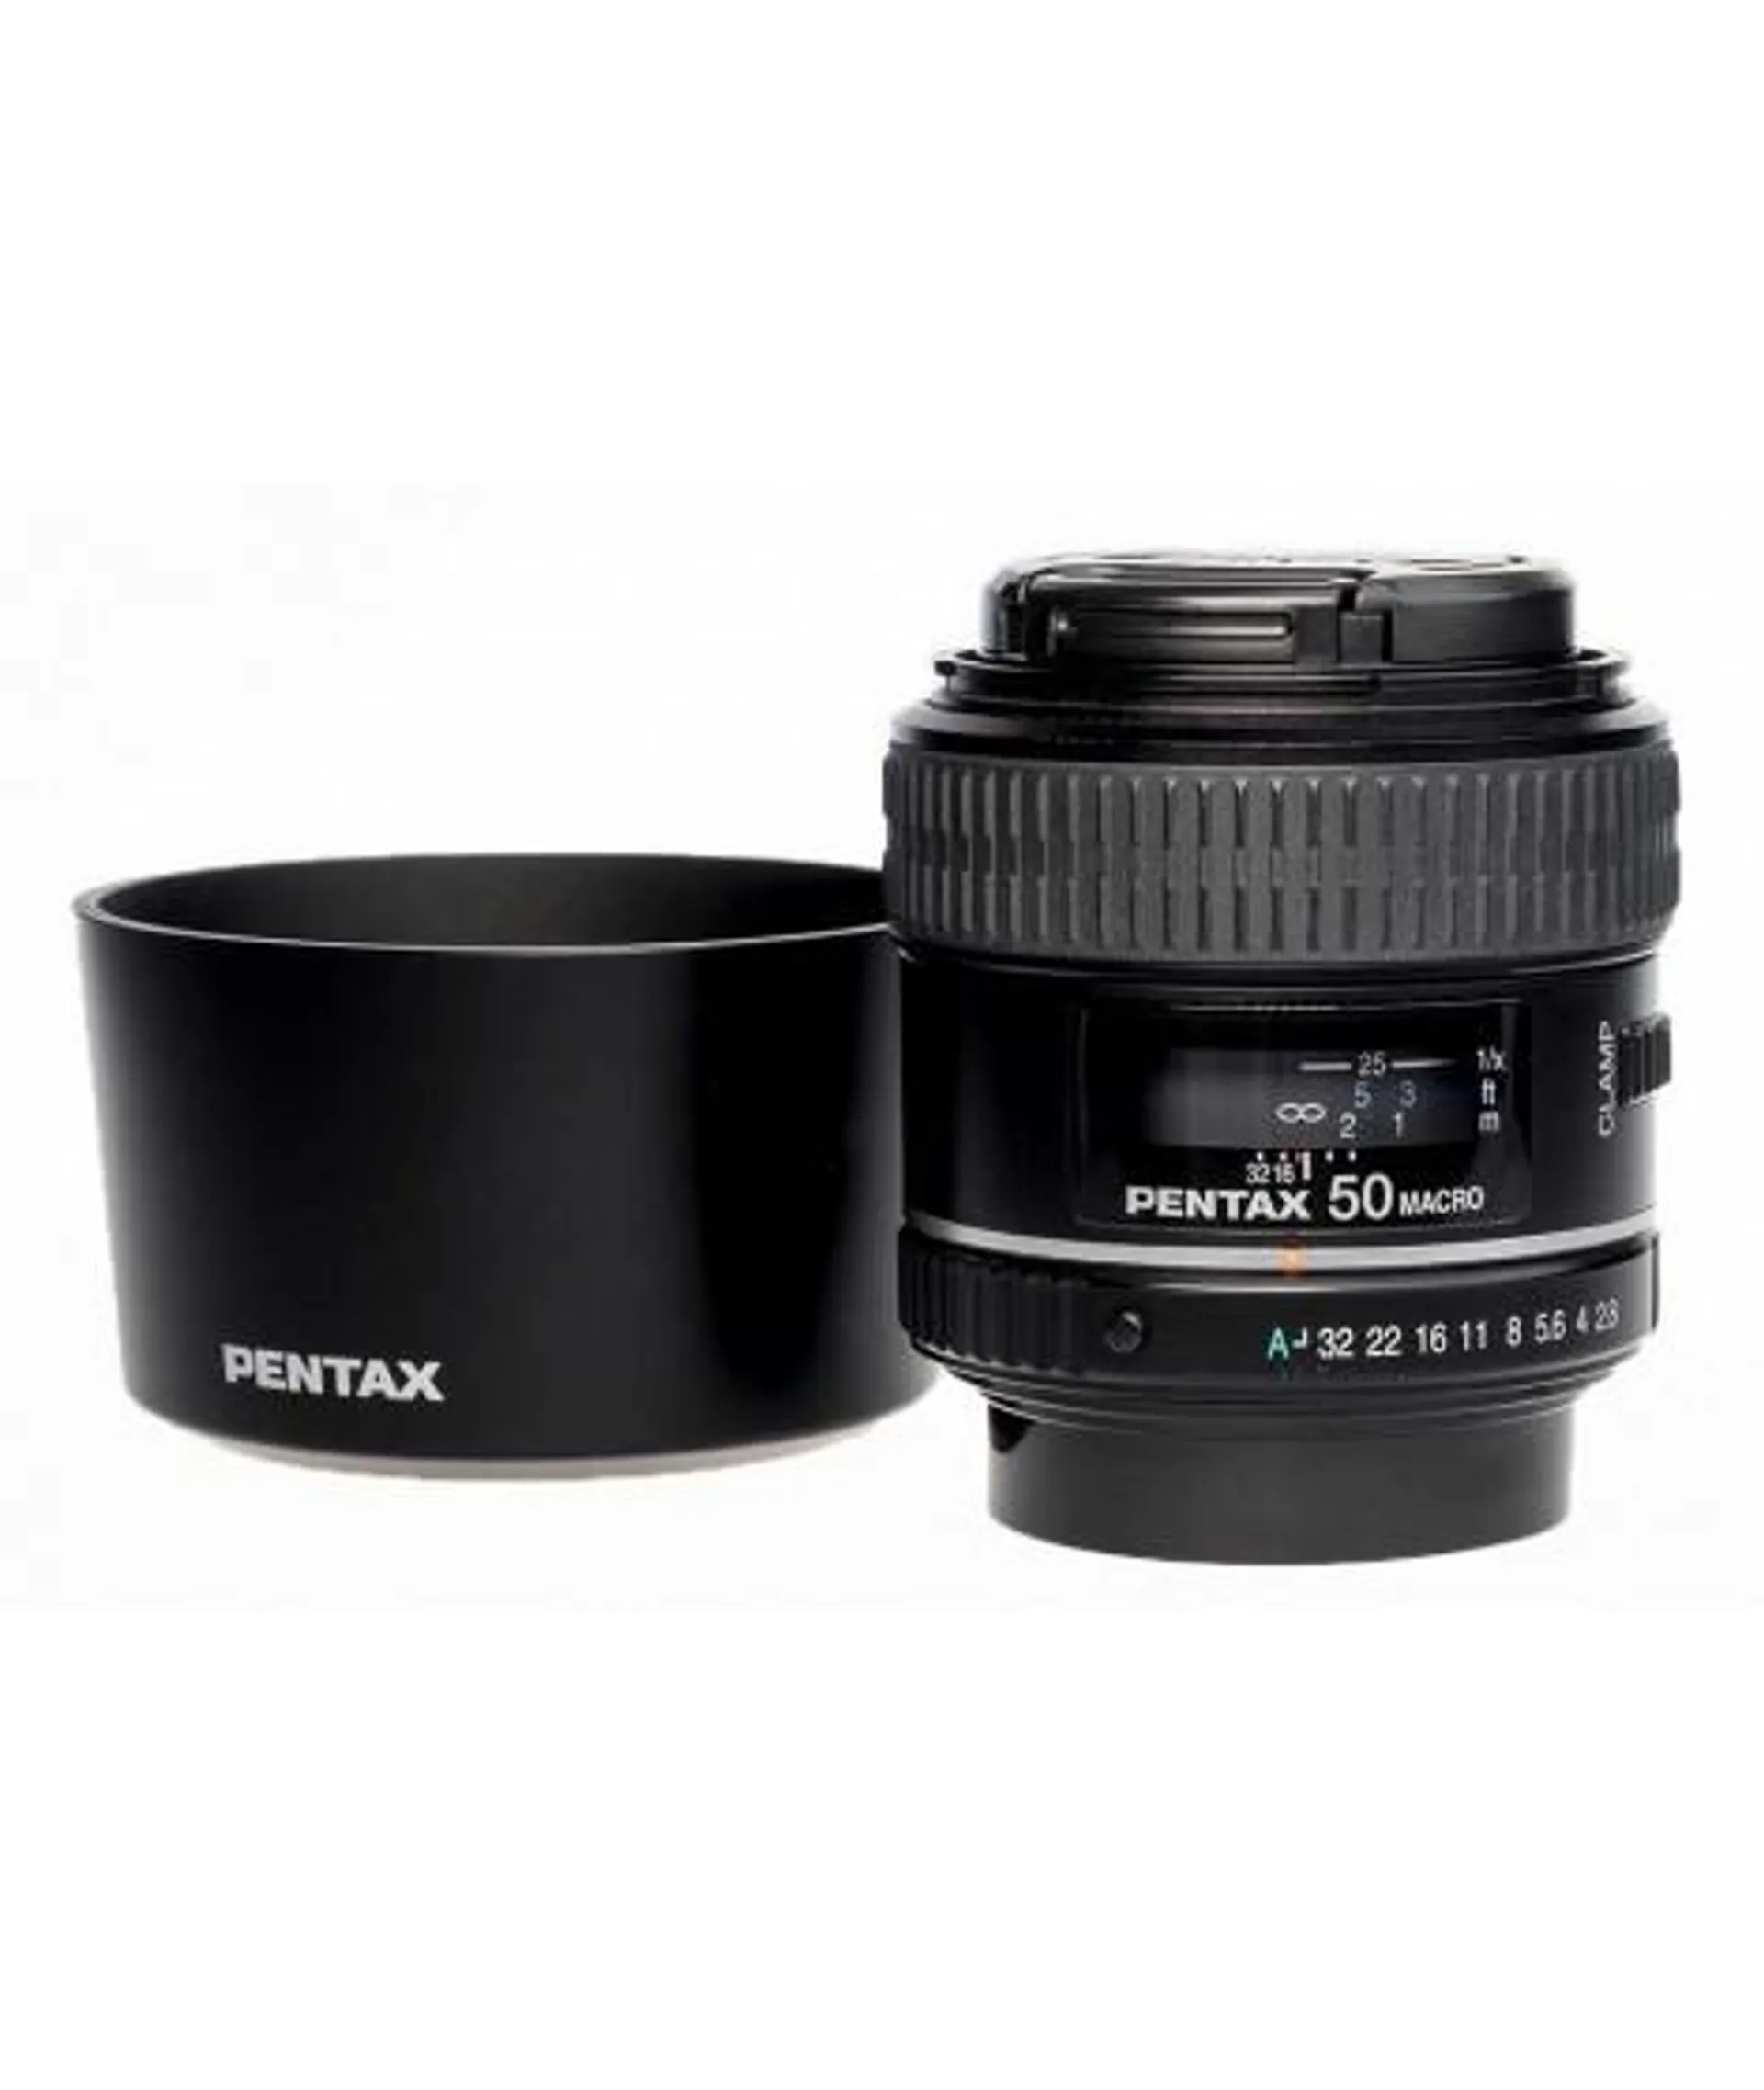 Pentax 50mm f2.8 FA smc Macro reacondicionado